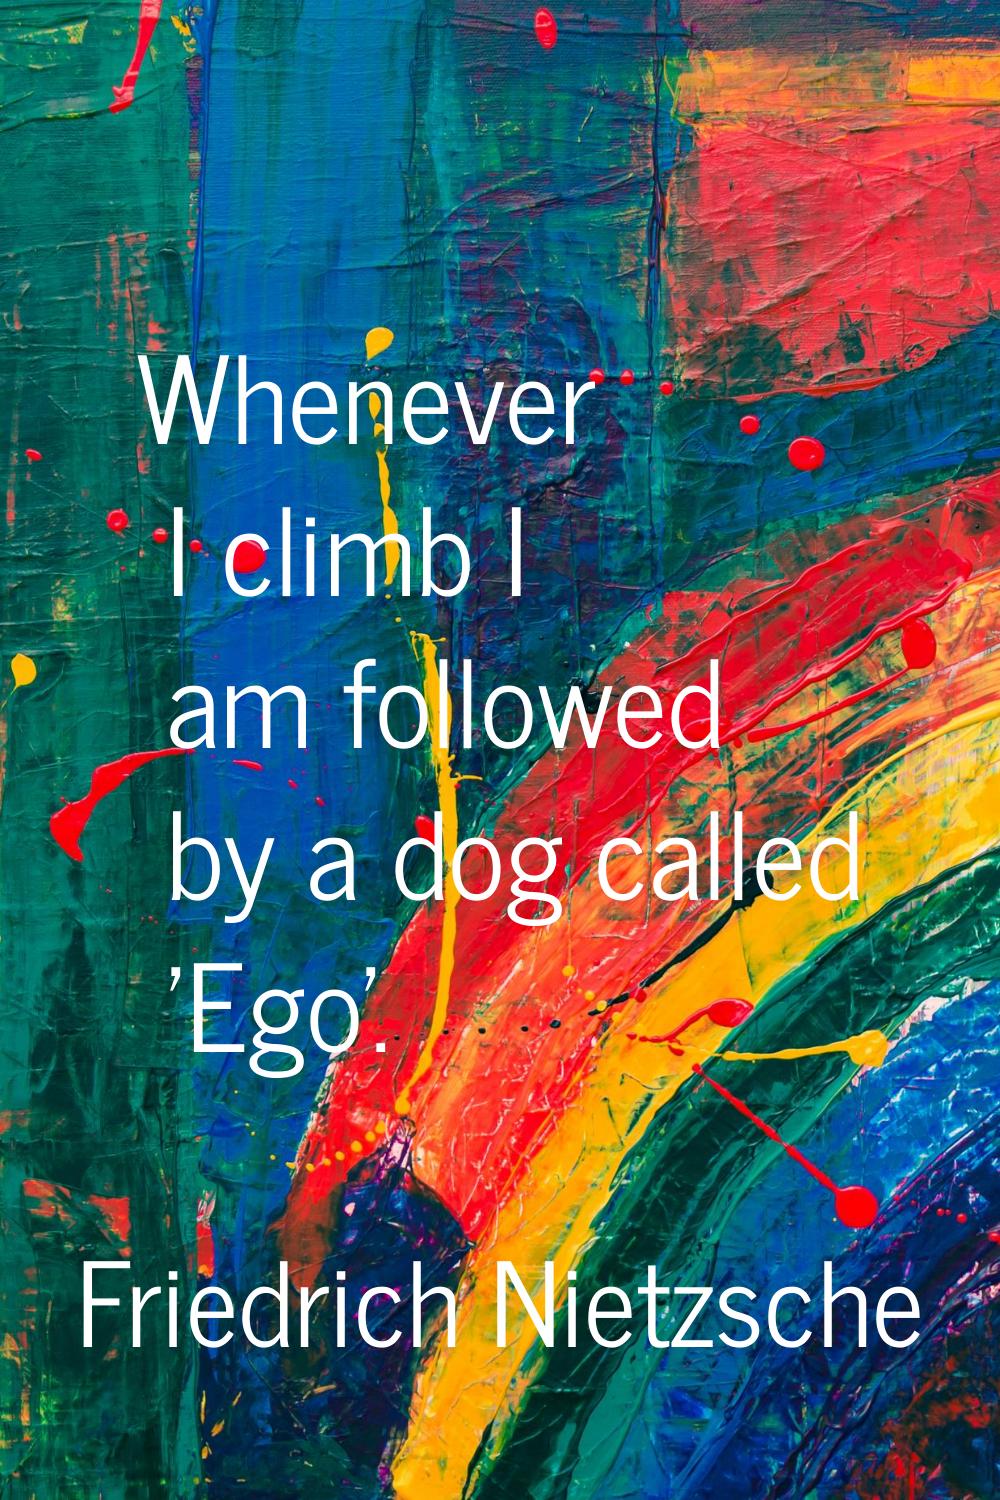 Whenever I climb I am followed by a dog called 'Ego'.